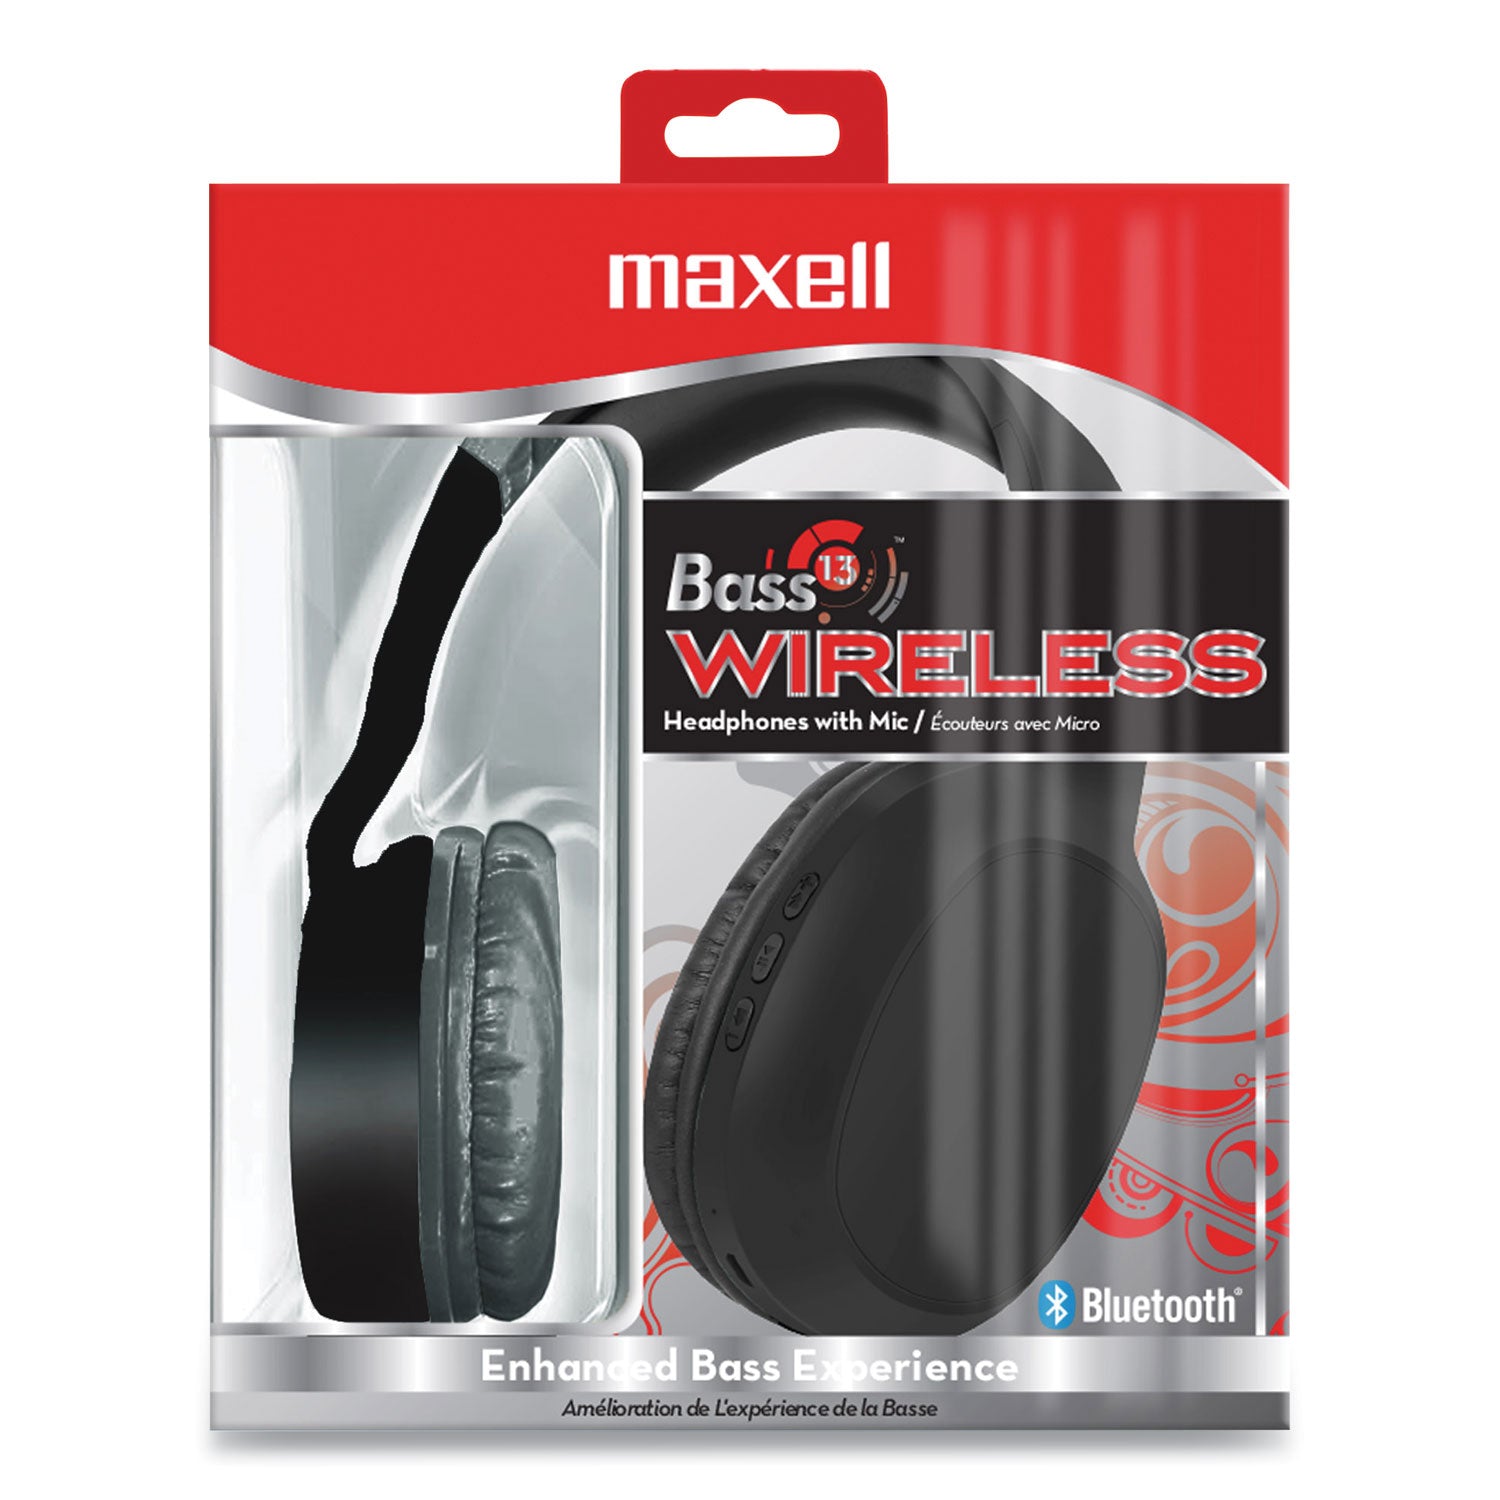 bass-13-wireless-headphone-with-mic-black_max199793 - 2